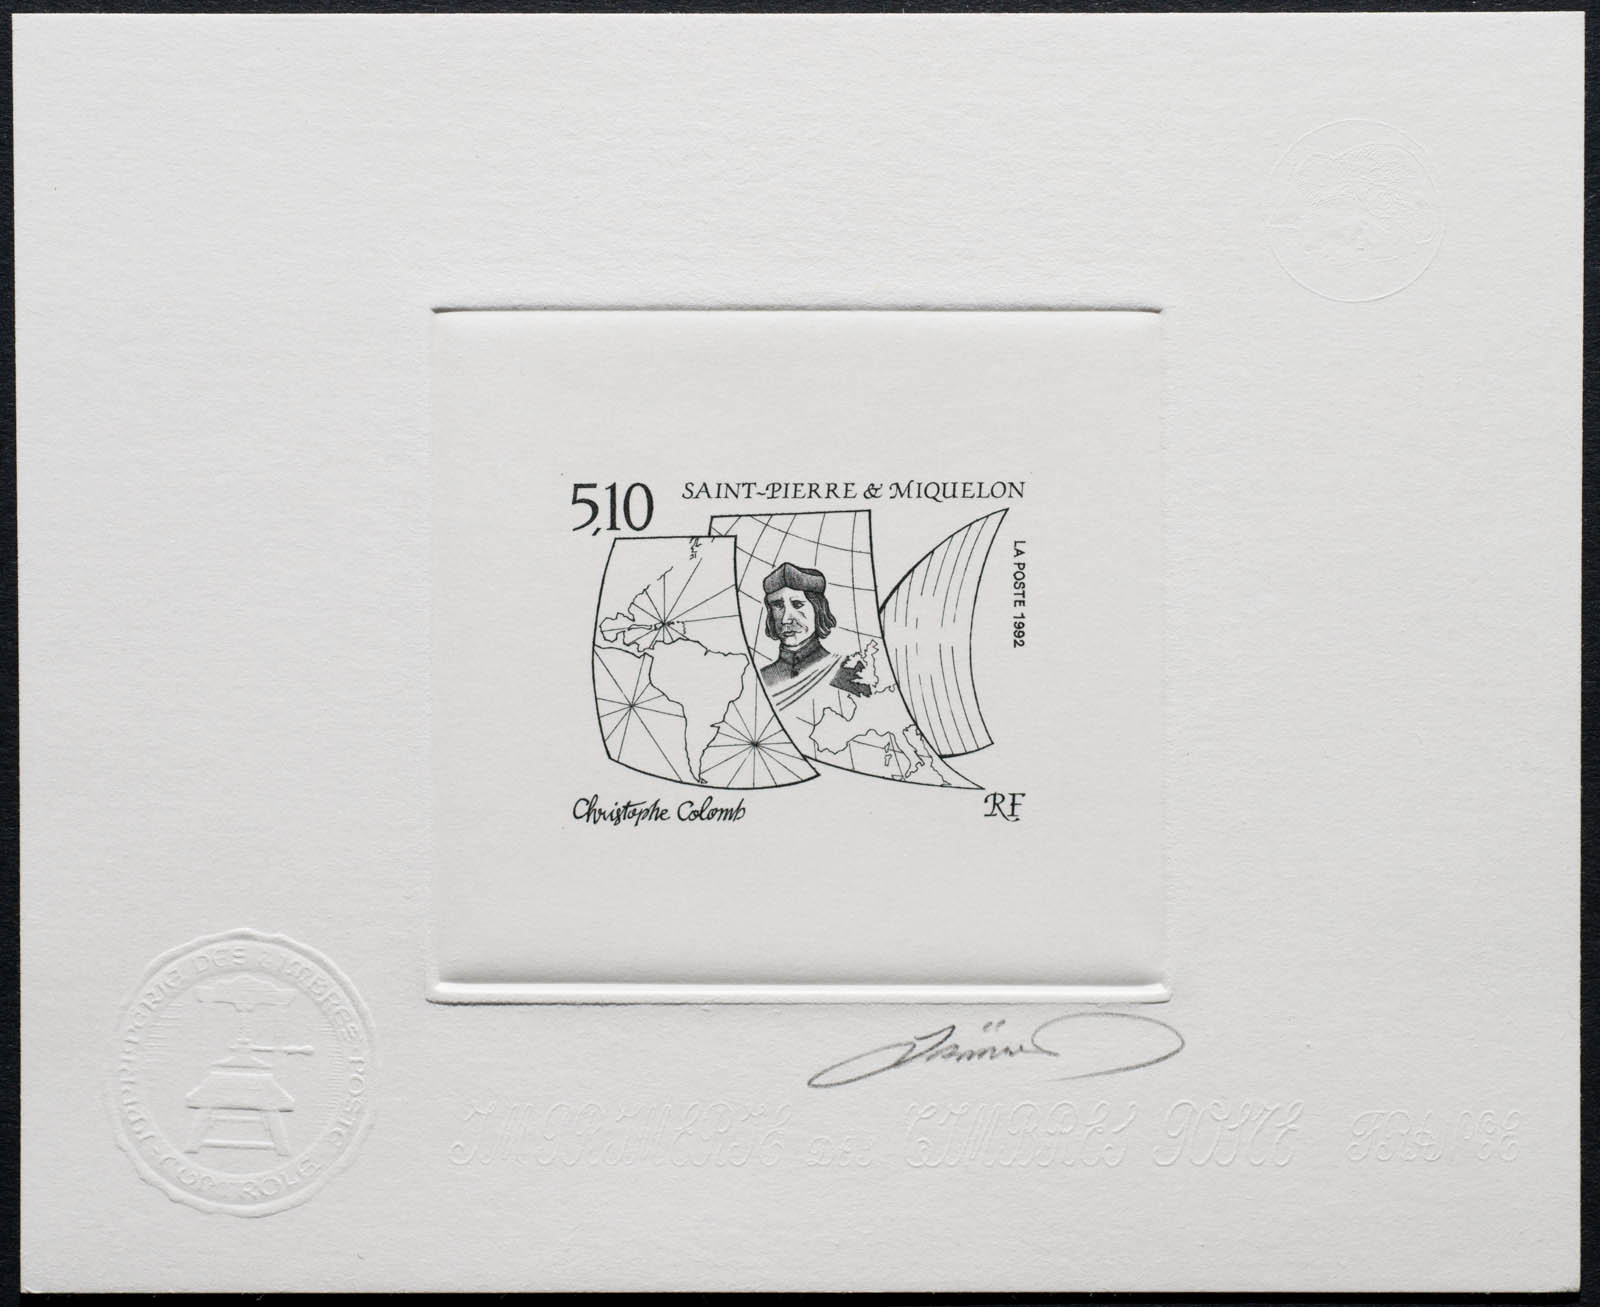 St. Pierre & Miquelon Columbus Stamp Artist's Proof